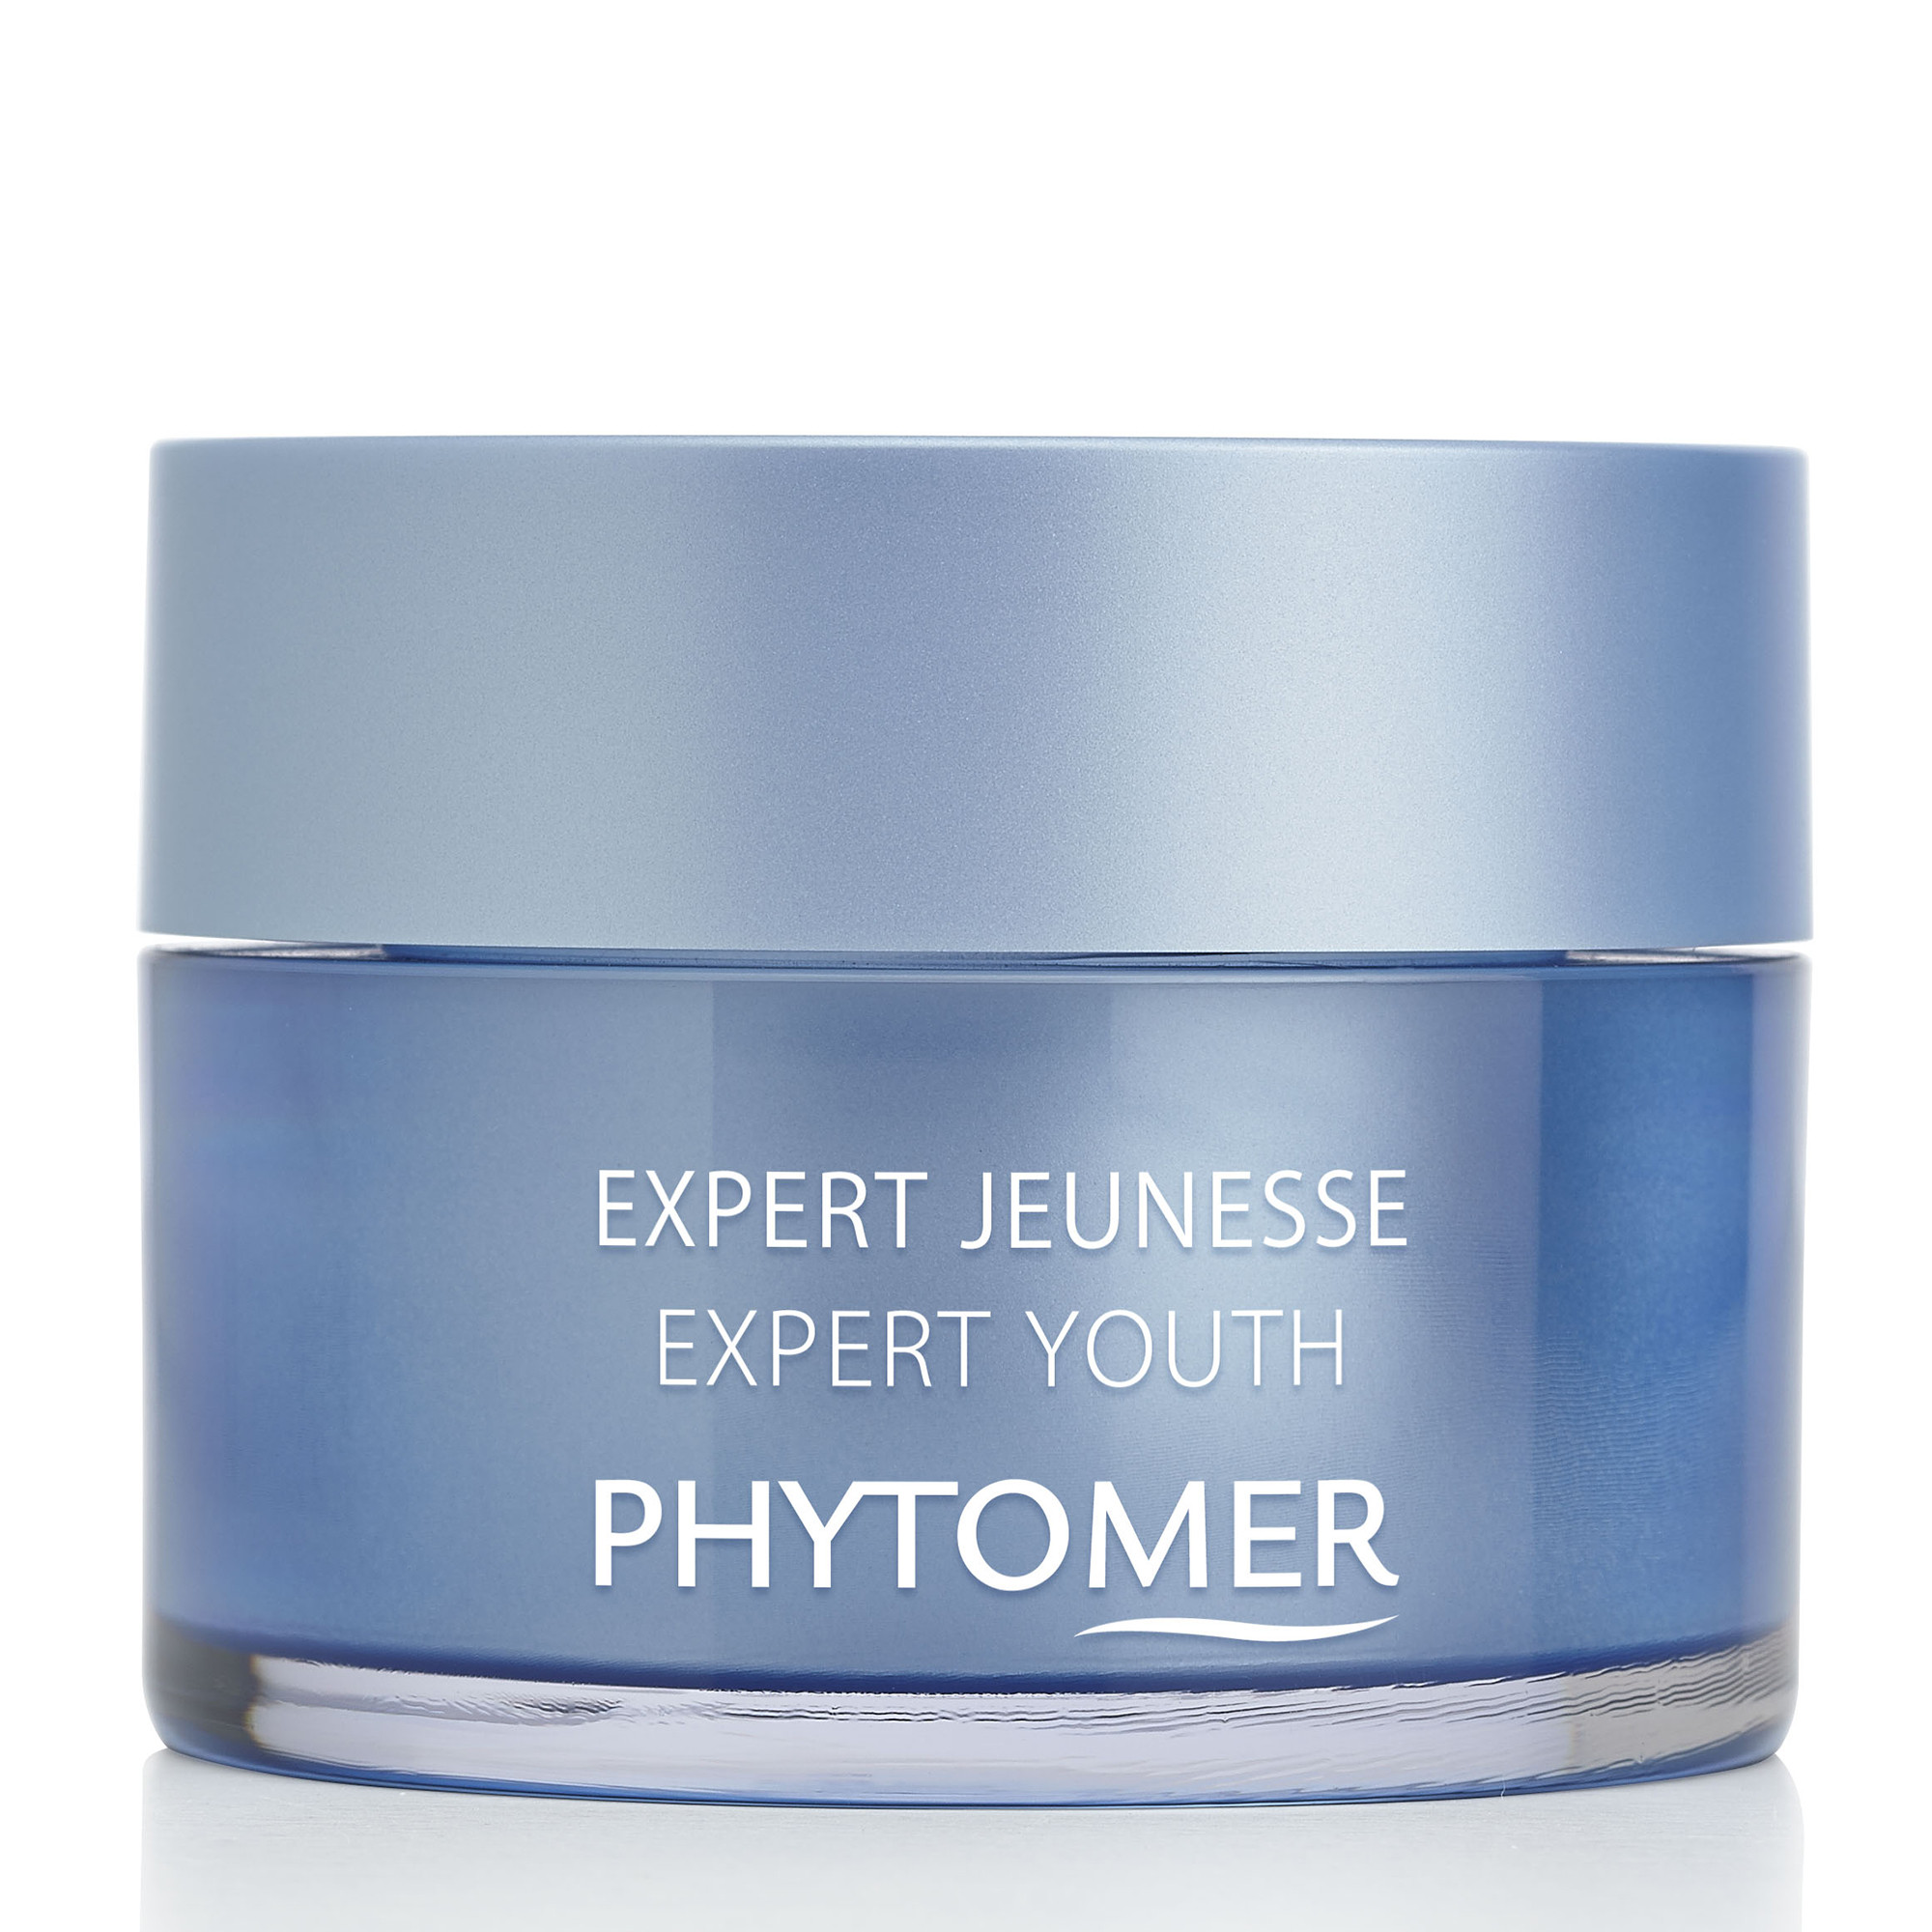 Омолоджуючий крем, що зміцнює Phytomer Expert Youth Wrinkle Correction Cream